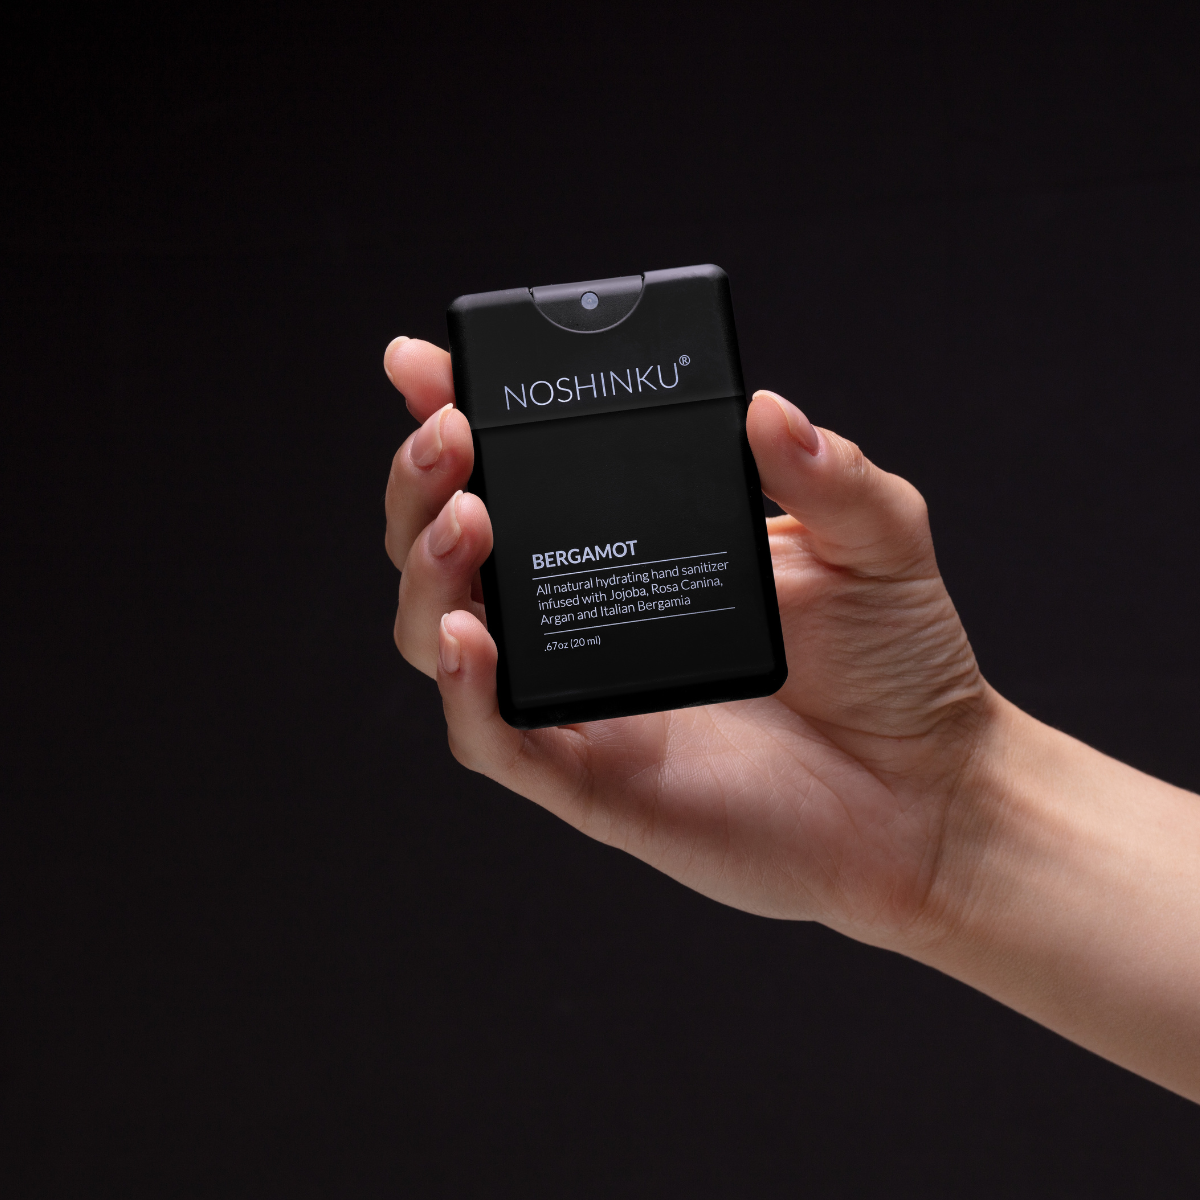 Refillable Bergamot Nourishing Pocket Hand Sanitizer